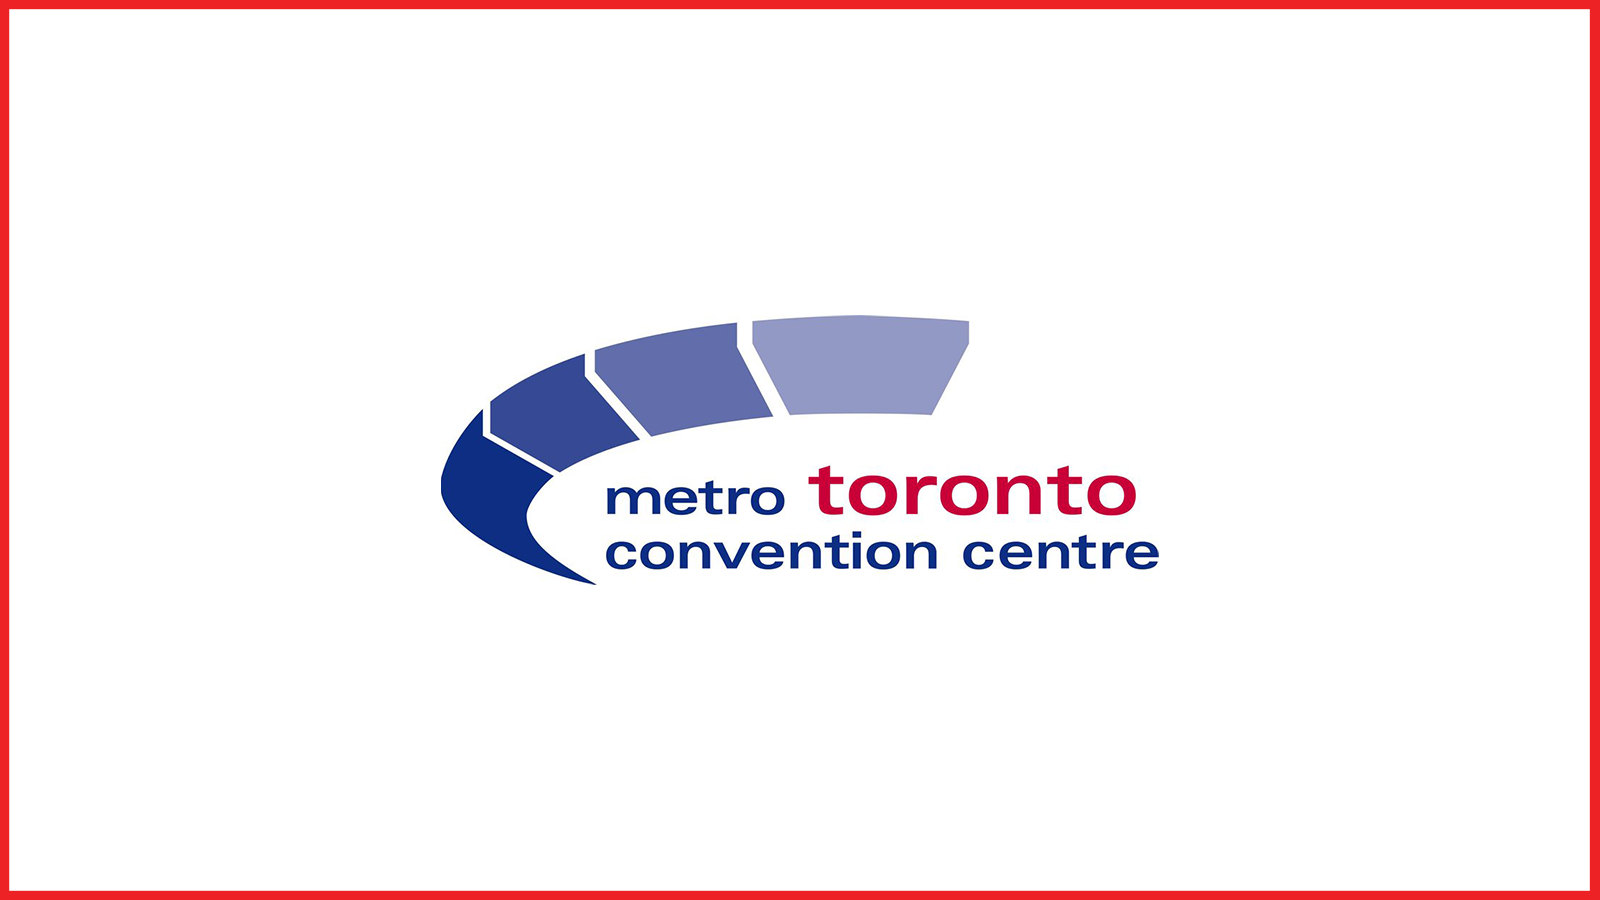 metro toronto convention centre logo with red border